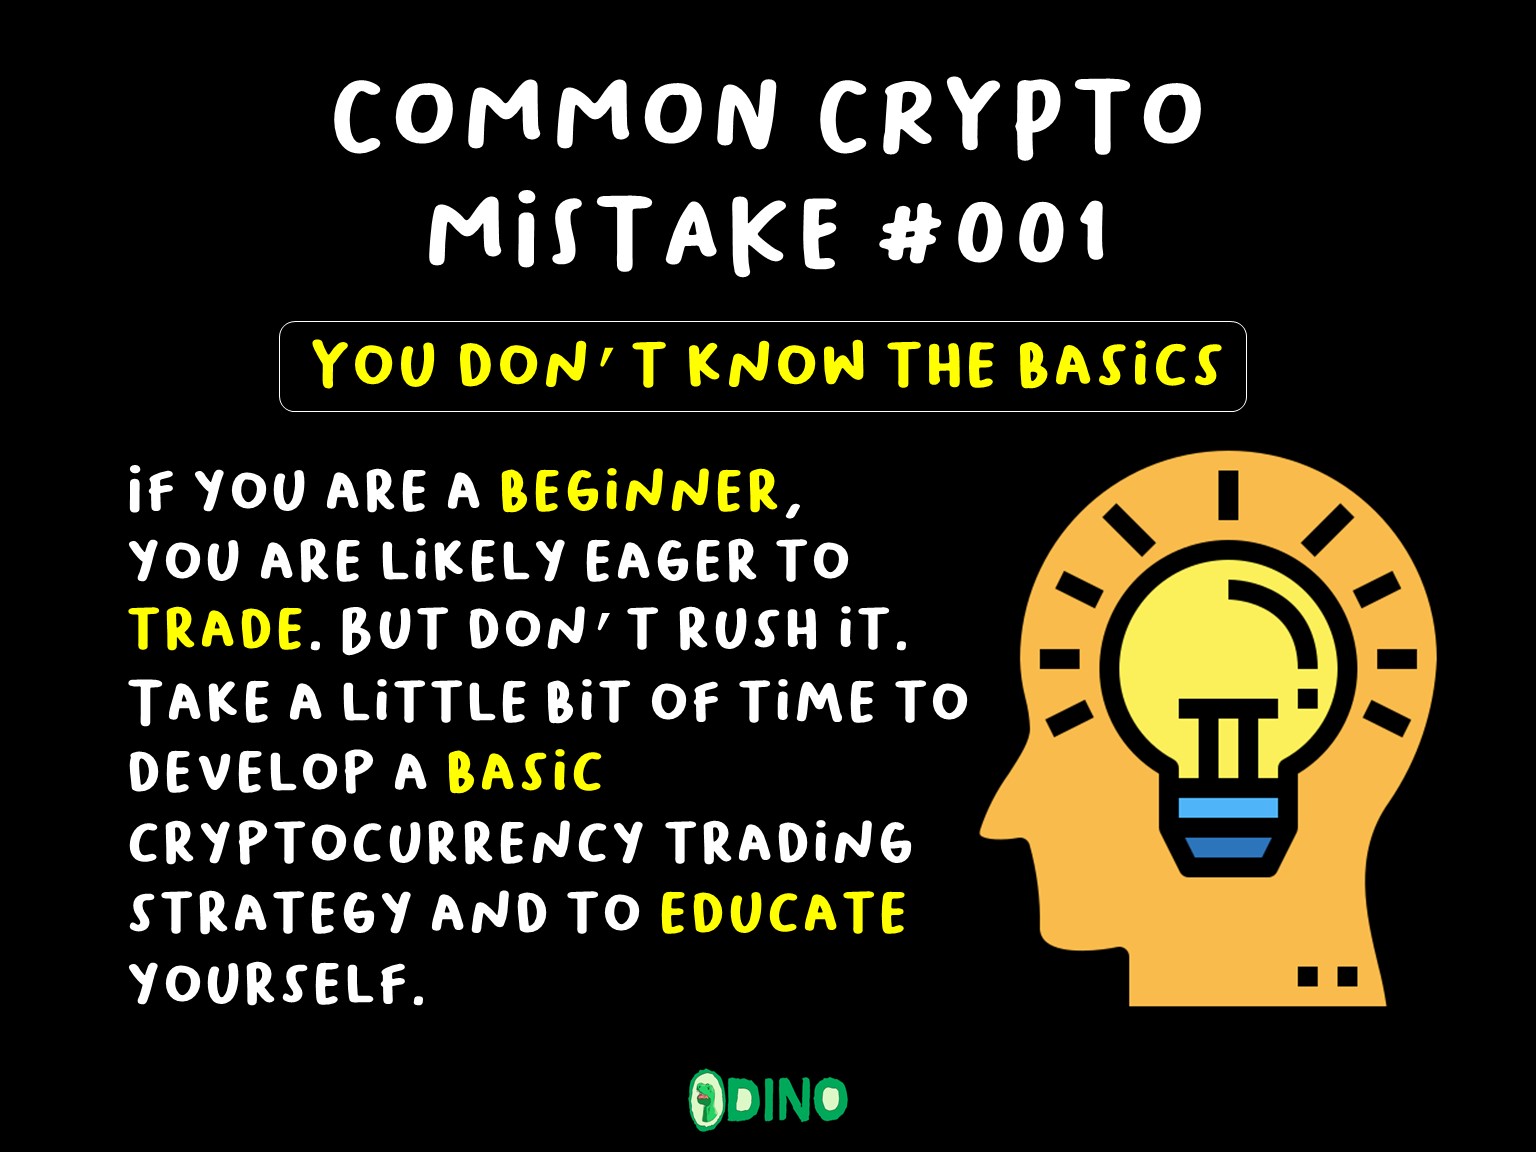 Common Crypto Mistake #001